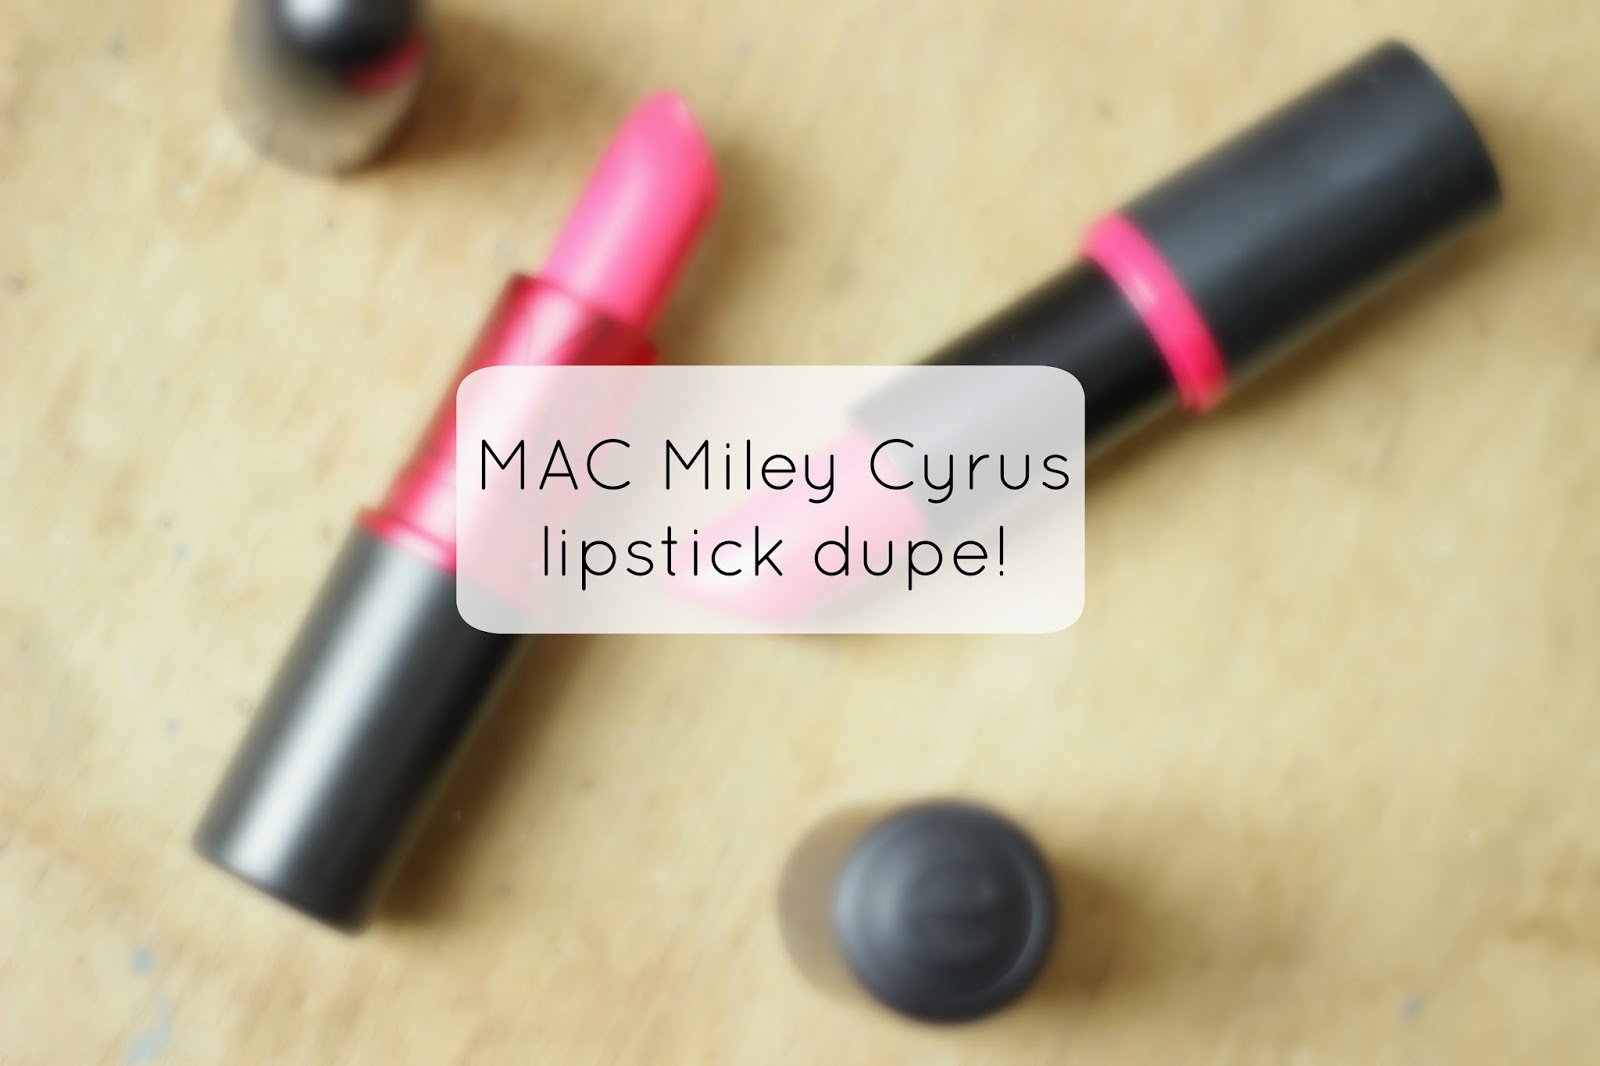 MAC miley cyrus lipstick dupe